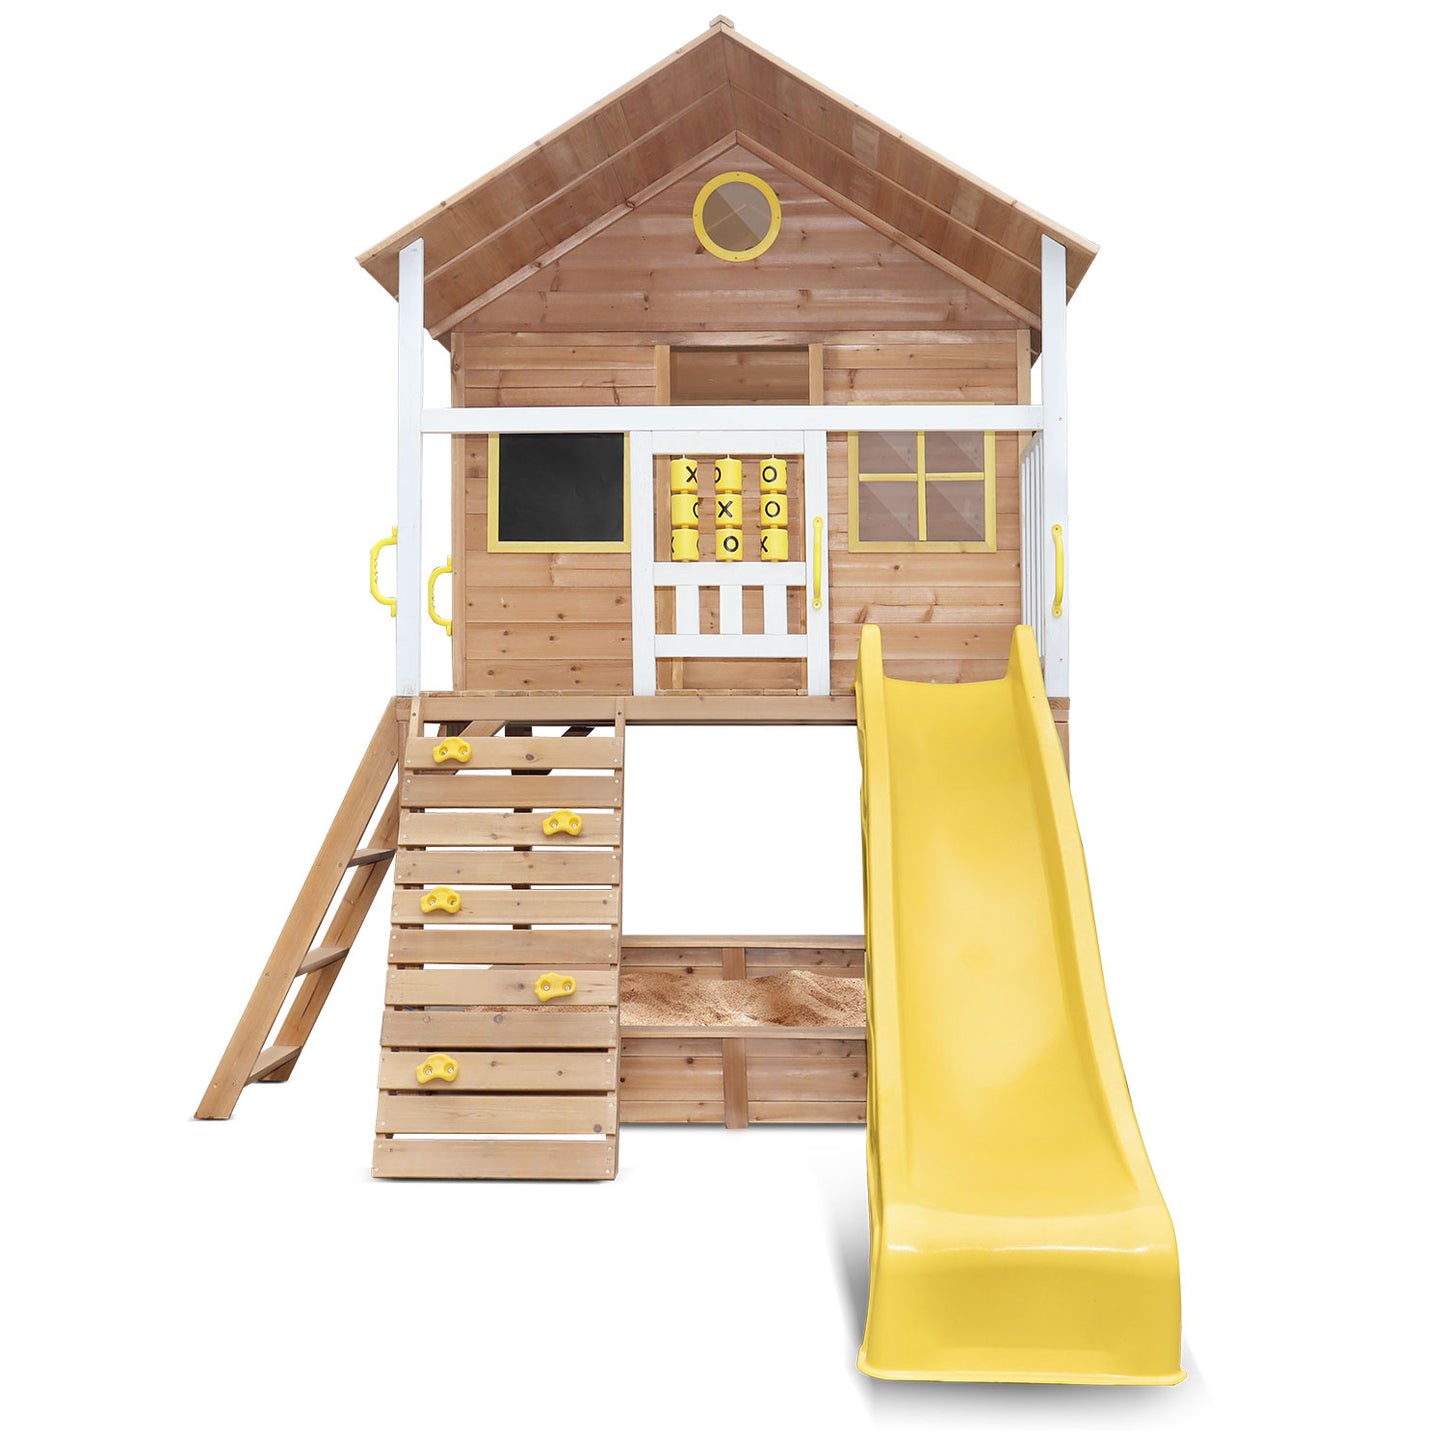 Lifespan Kids Warrigal Cubby House - Yellow Slide